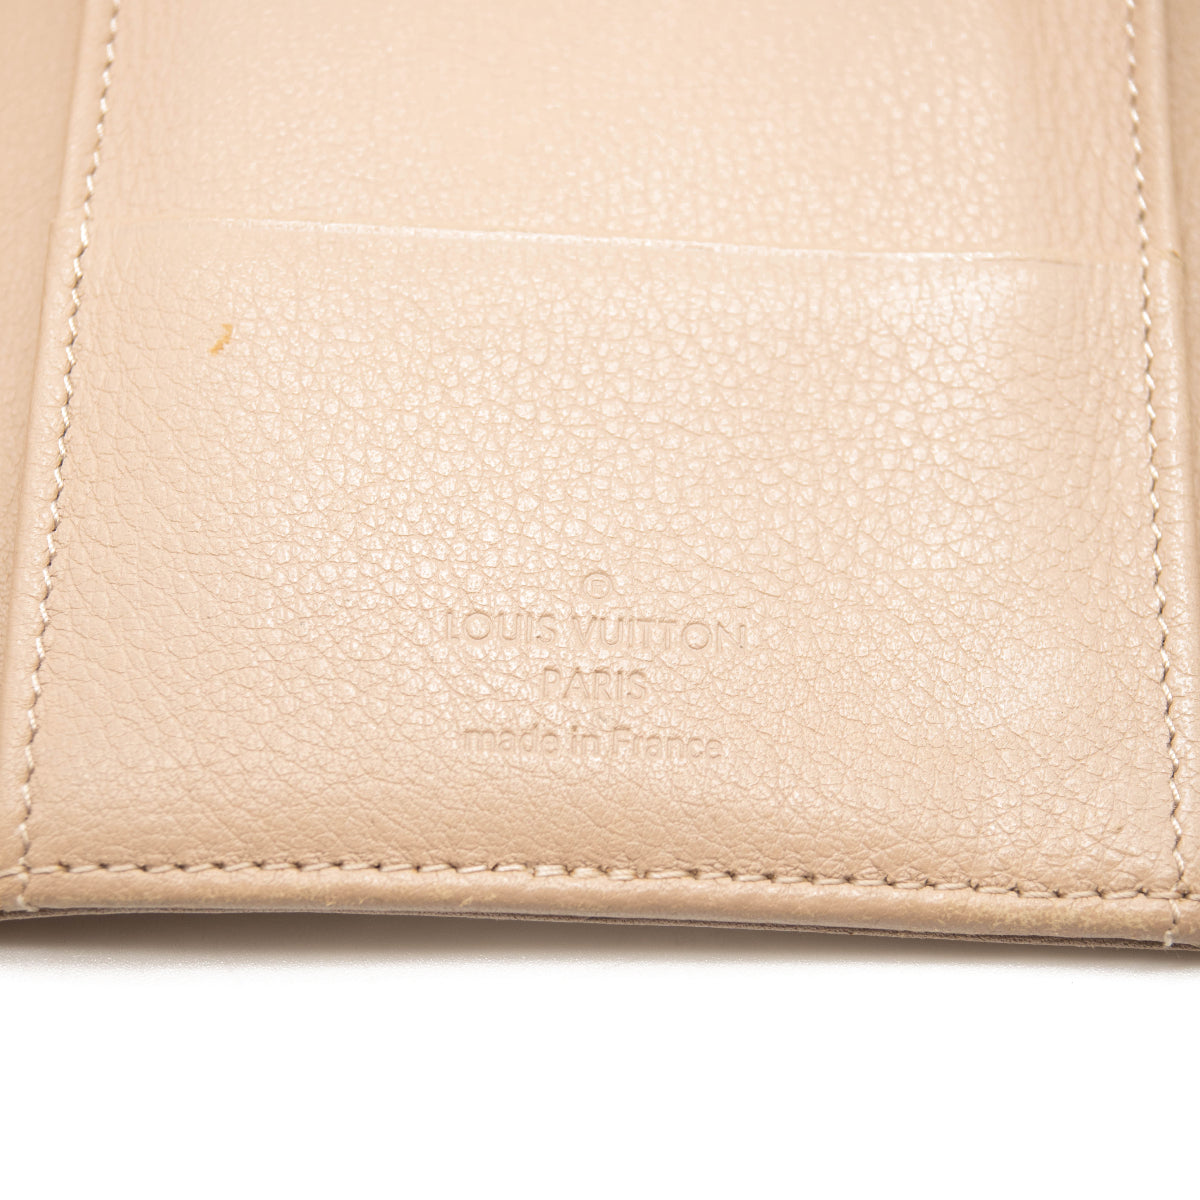 Louis Vuitton Damier Graphite Zippy Compact Wallet - MyDesignerly